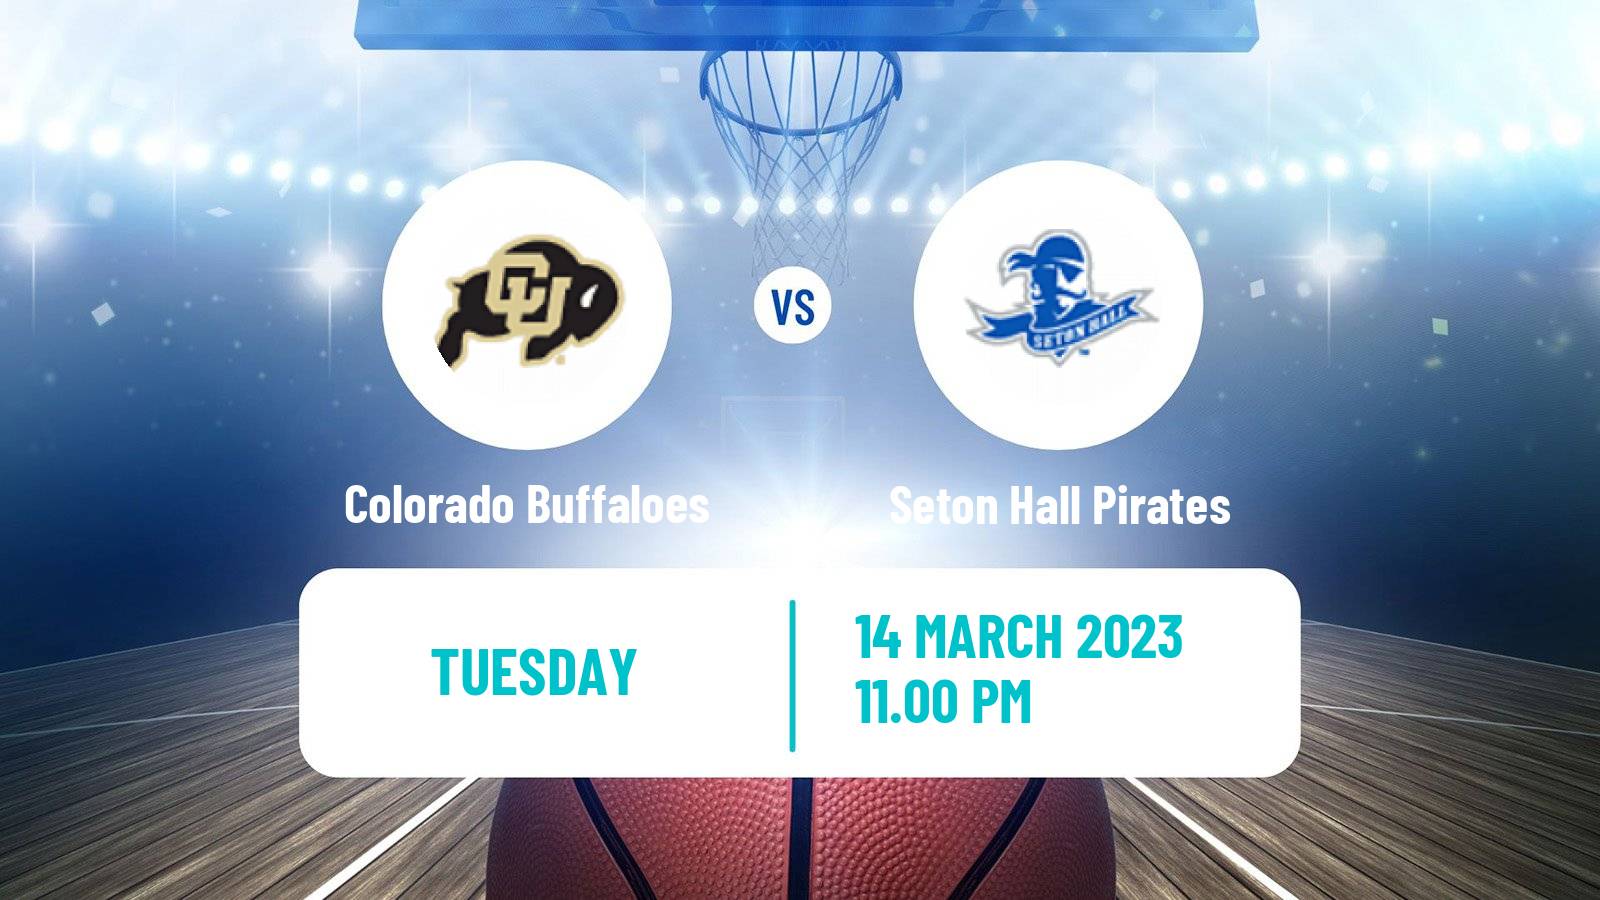 Basketball NIT Colorado Buffaloes - Seton Hall Pirates